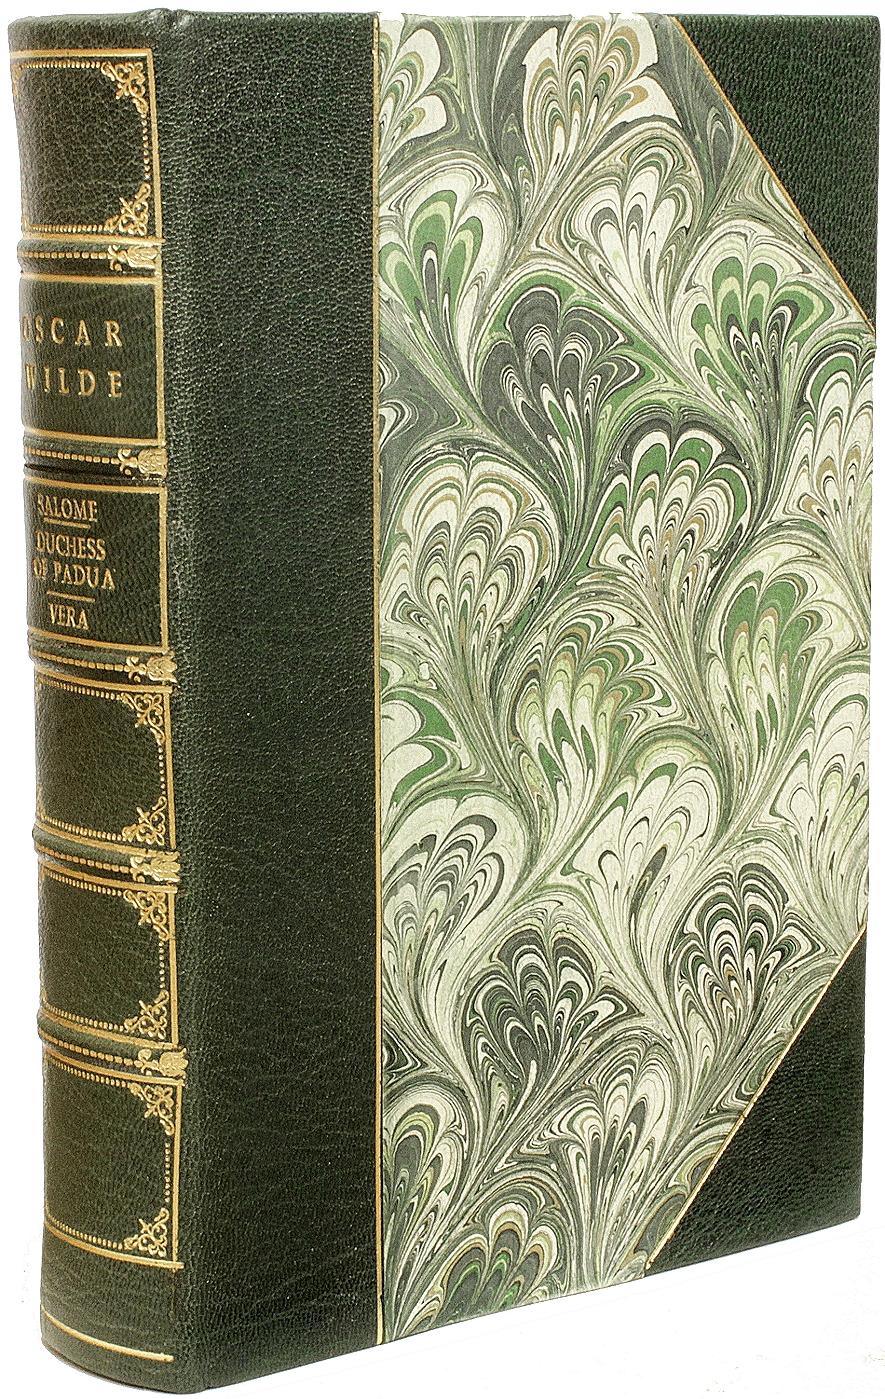 AUTHOR: WILDE, Oscar. 

TITLE: The Works / Writings of Oscar Wilde.

PUBLISHER: London: Keller-Farmer Co., 1907.

DESCRIPTION: EDITION DE LUXE. 15 vols., 8-3/8